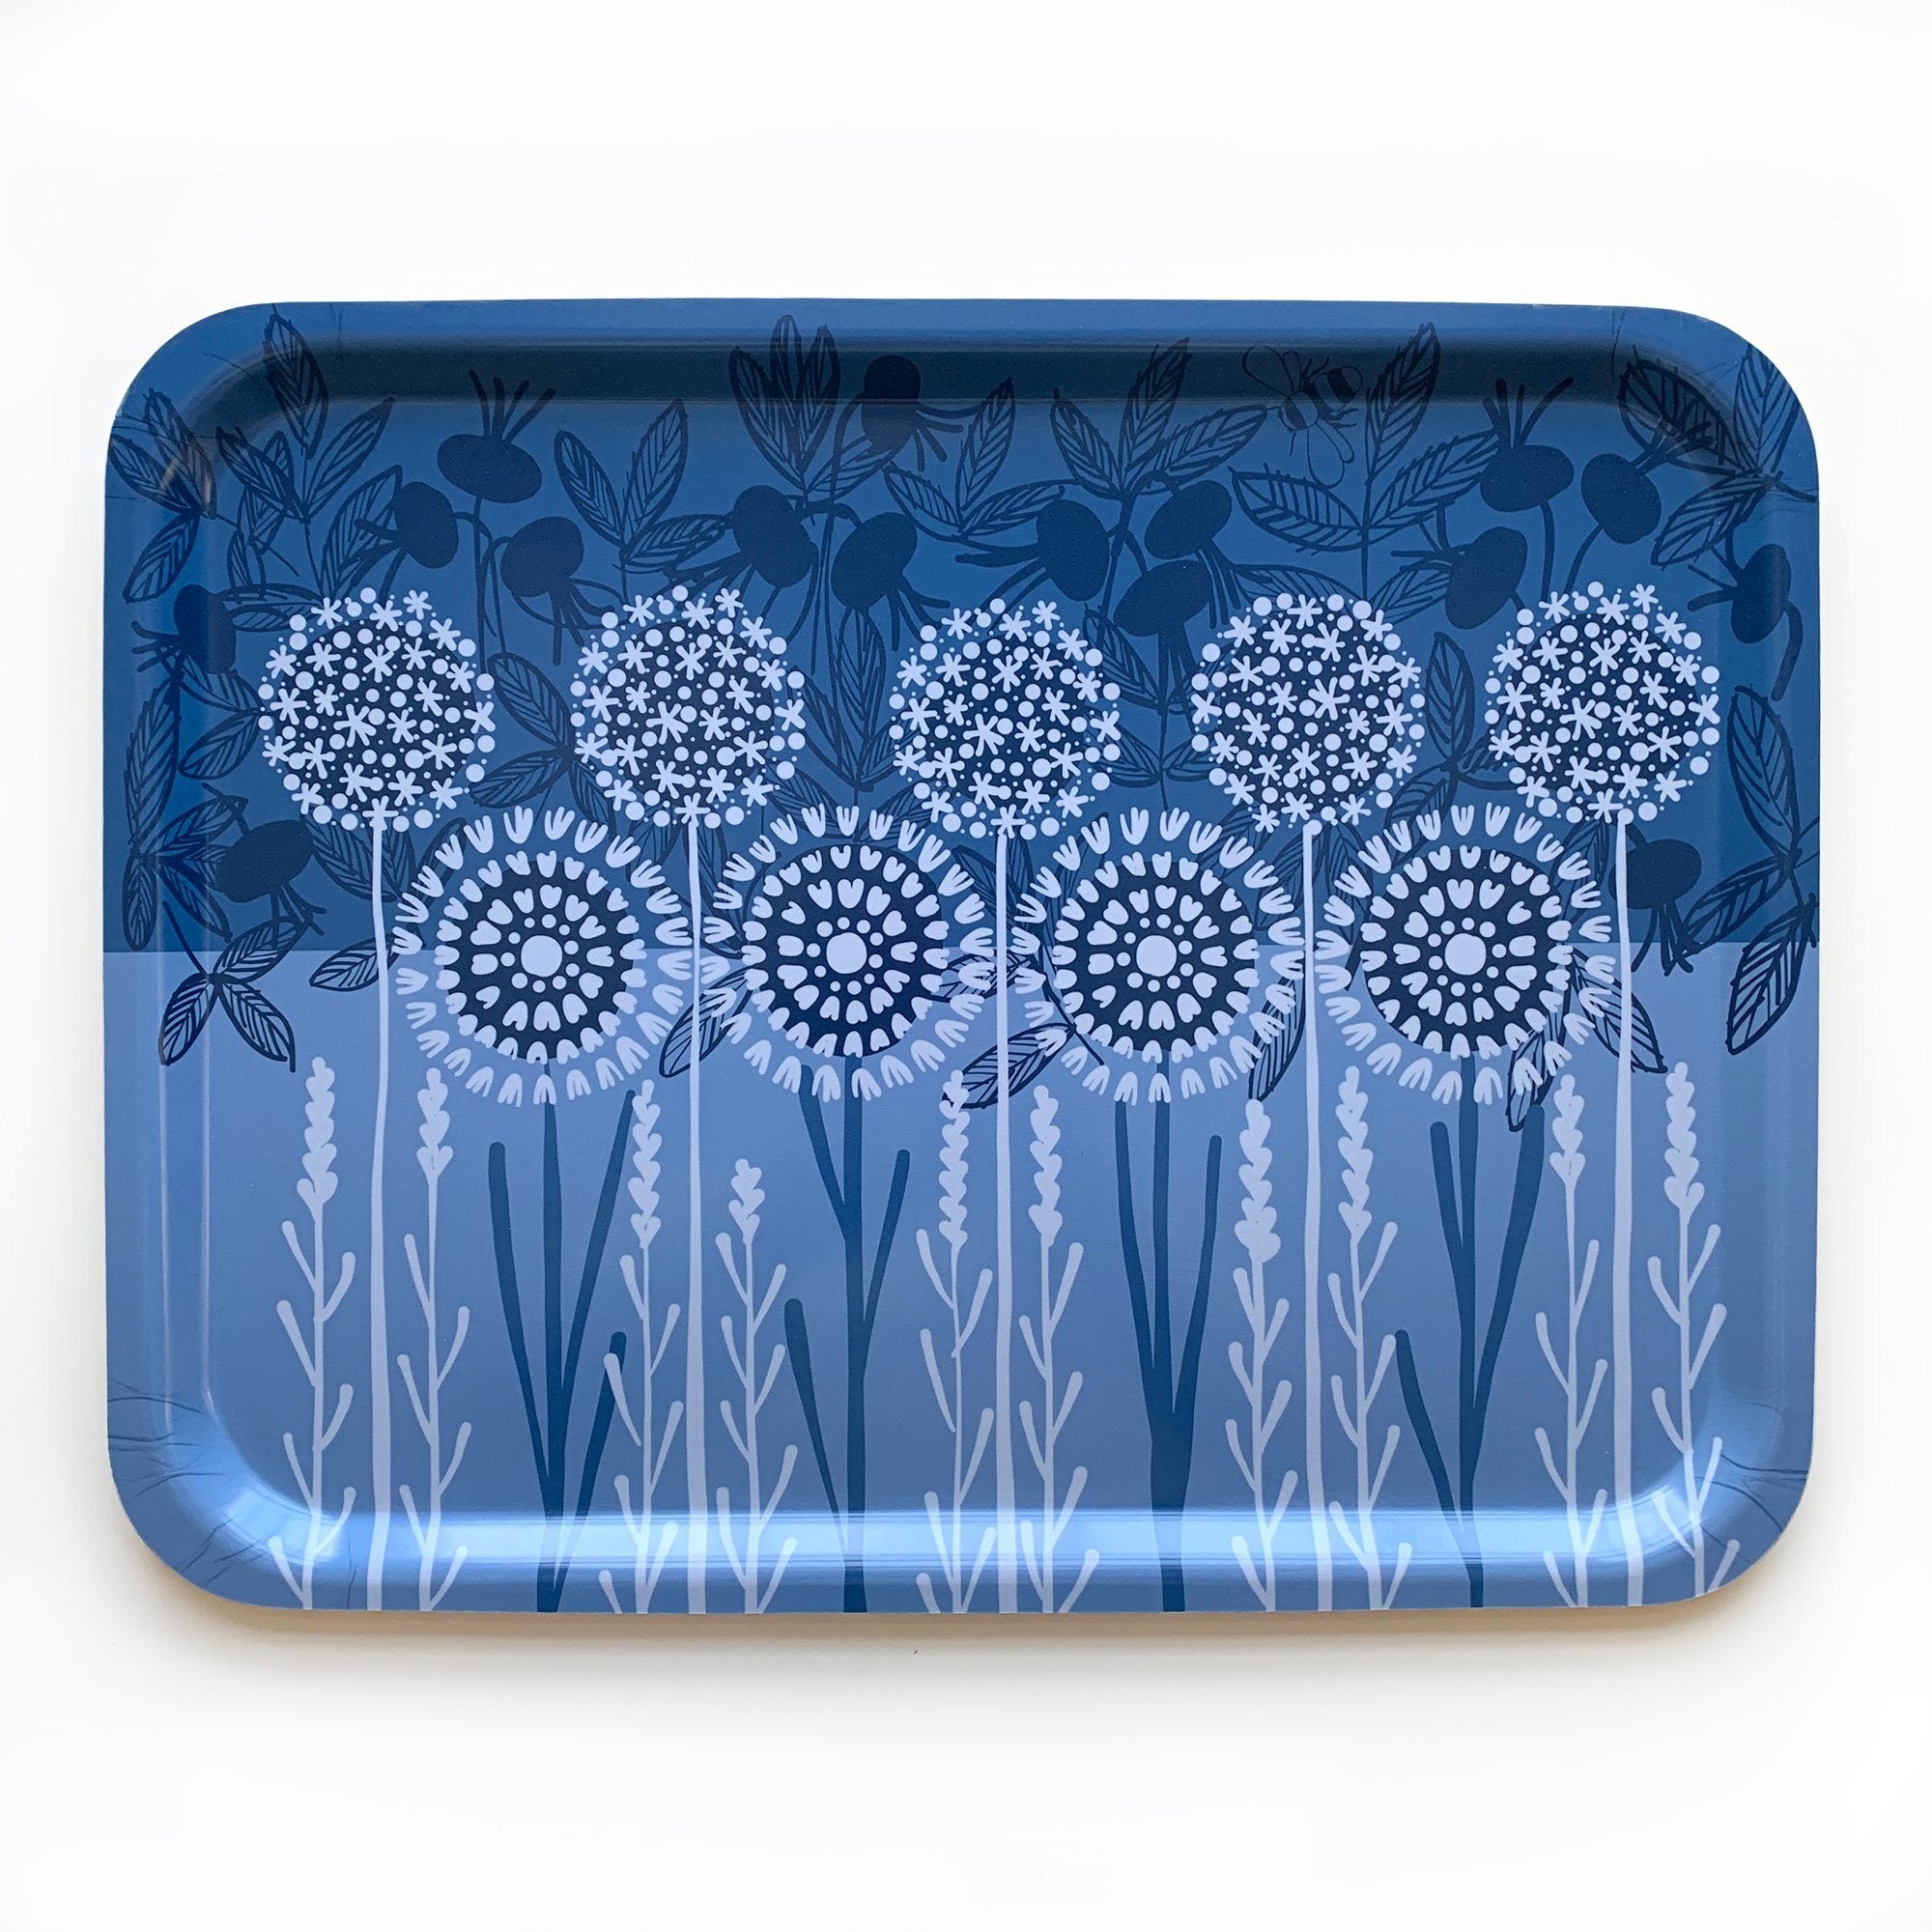 Bloom in Blue Tray | wood and melamine | 17" x 13" | Sweetgum sweetgum textiles company, LLC 